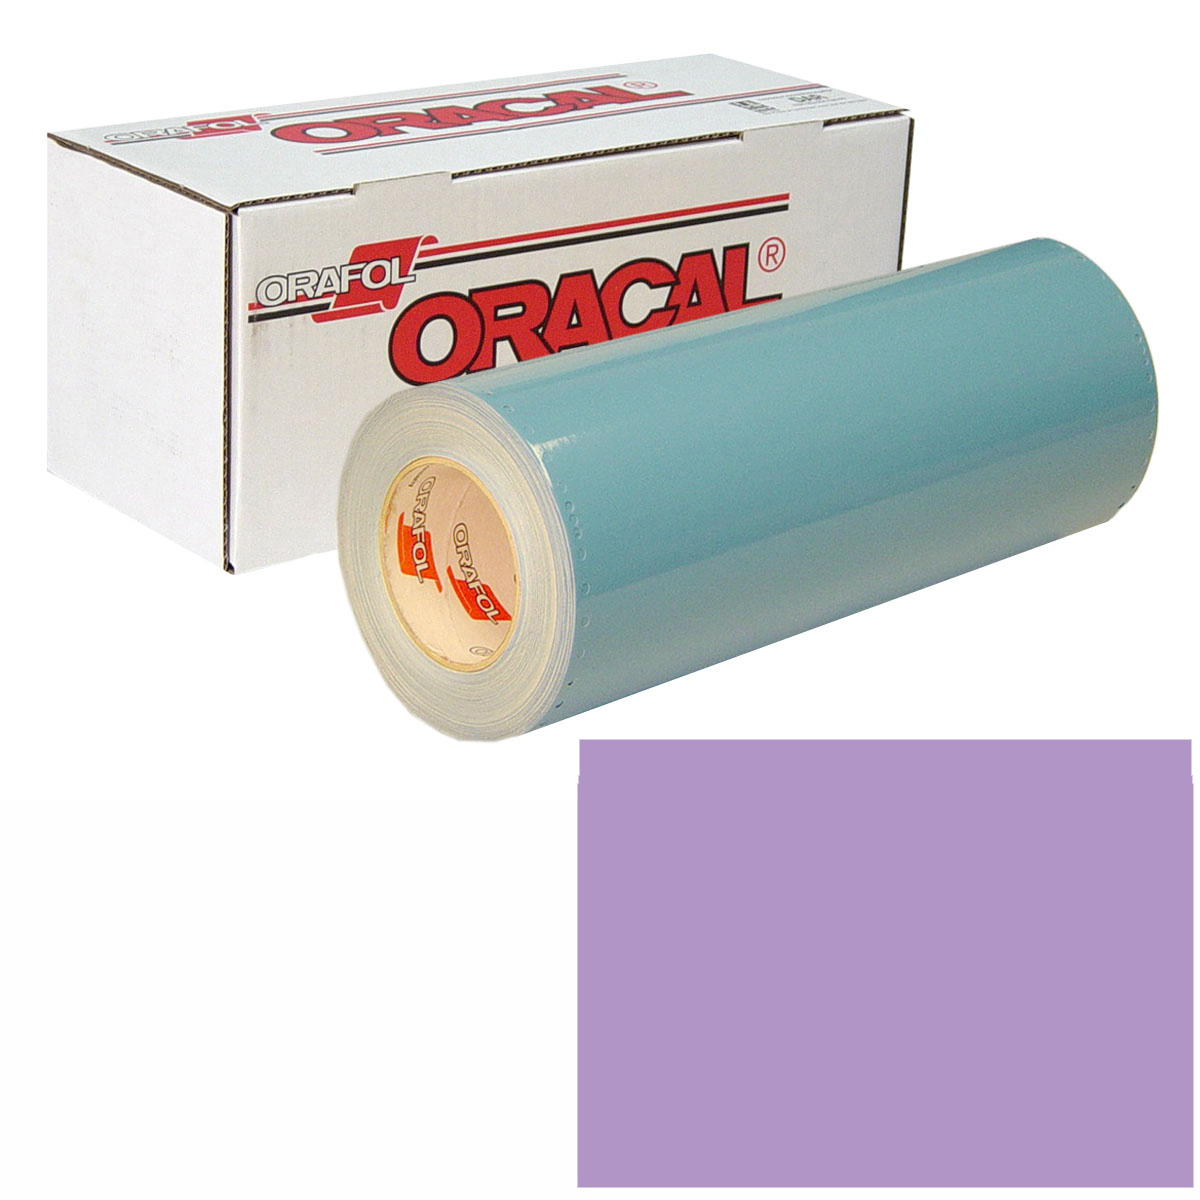 ORACAL 751 Unp 24in X 10yd 042 Lilac